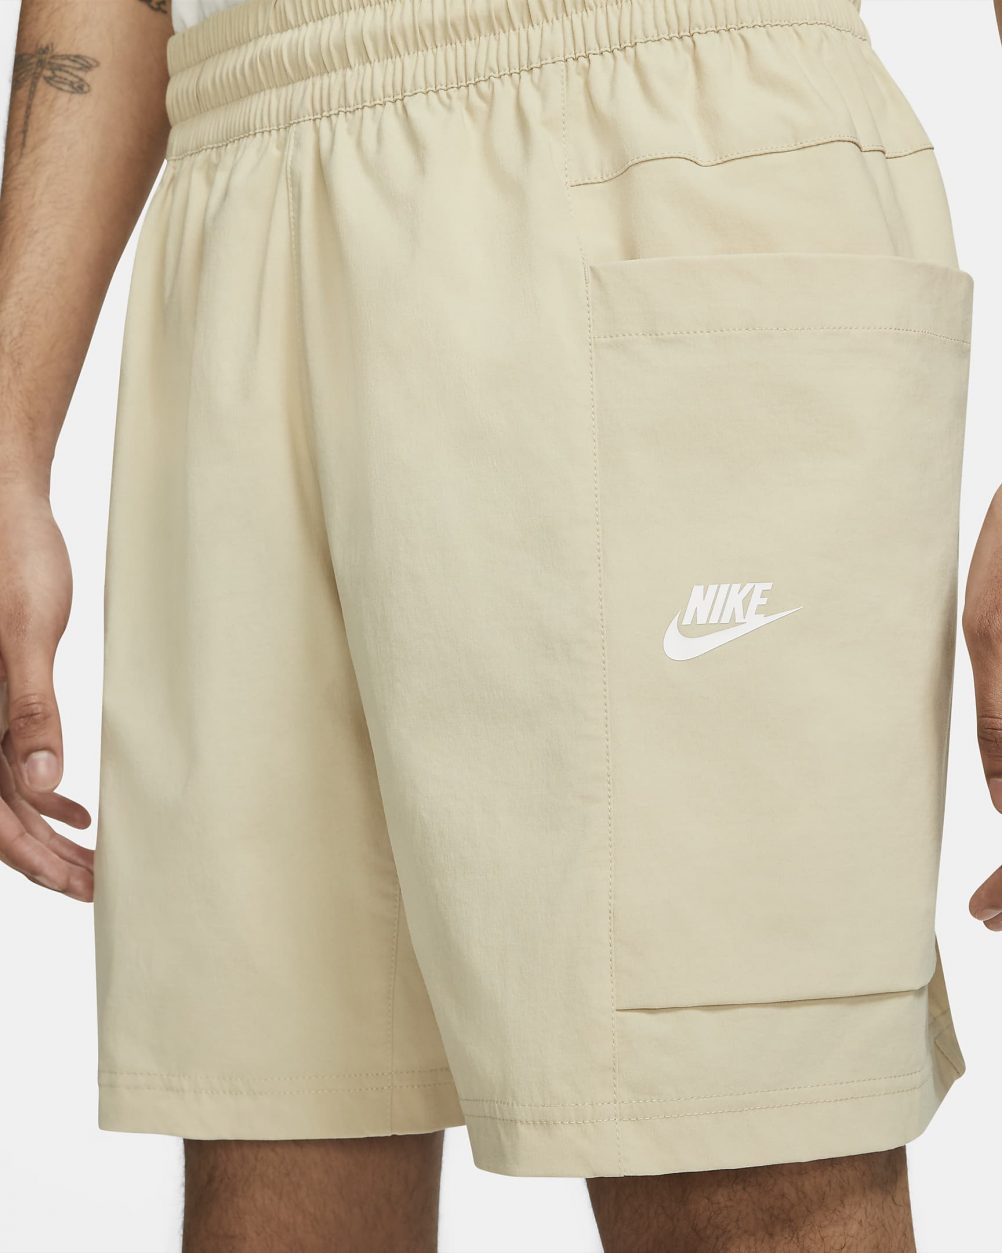 Nike Dunk Low Cheetah Shirts Clothing Outfits to Match